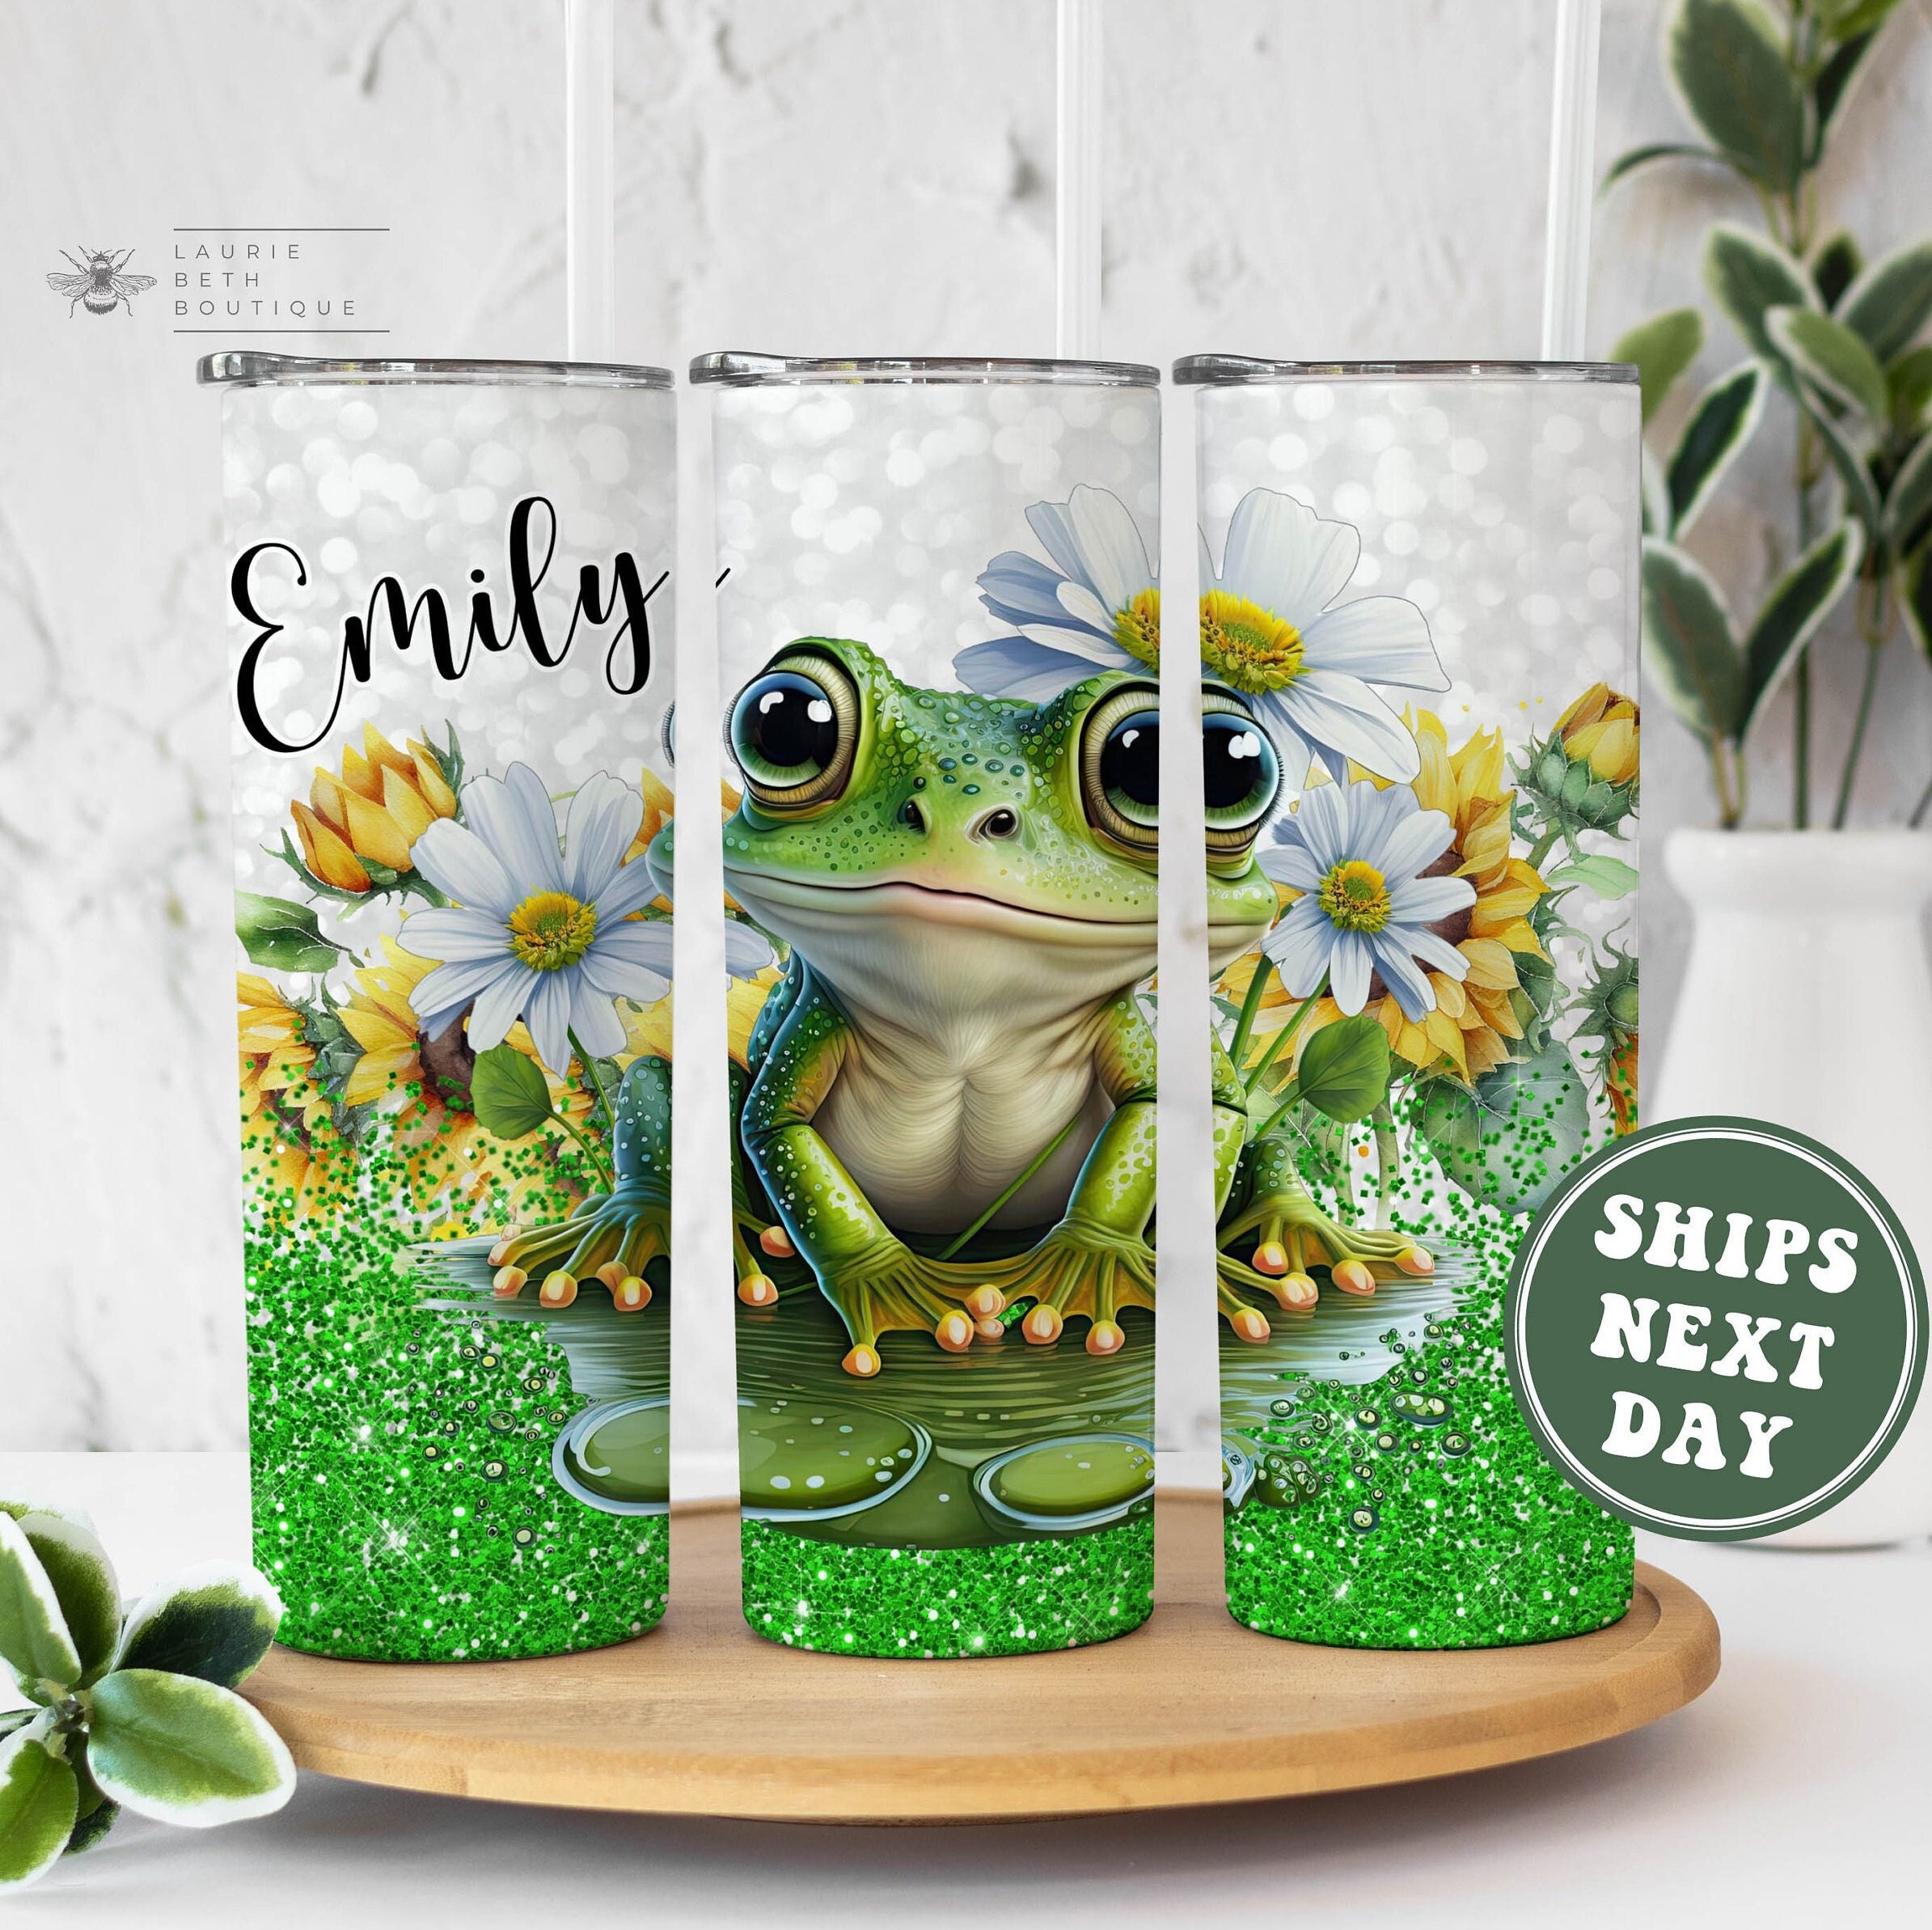 Cute frog gift ideas, frog kids tee, frog kids hoodies, frog home decor  gifts